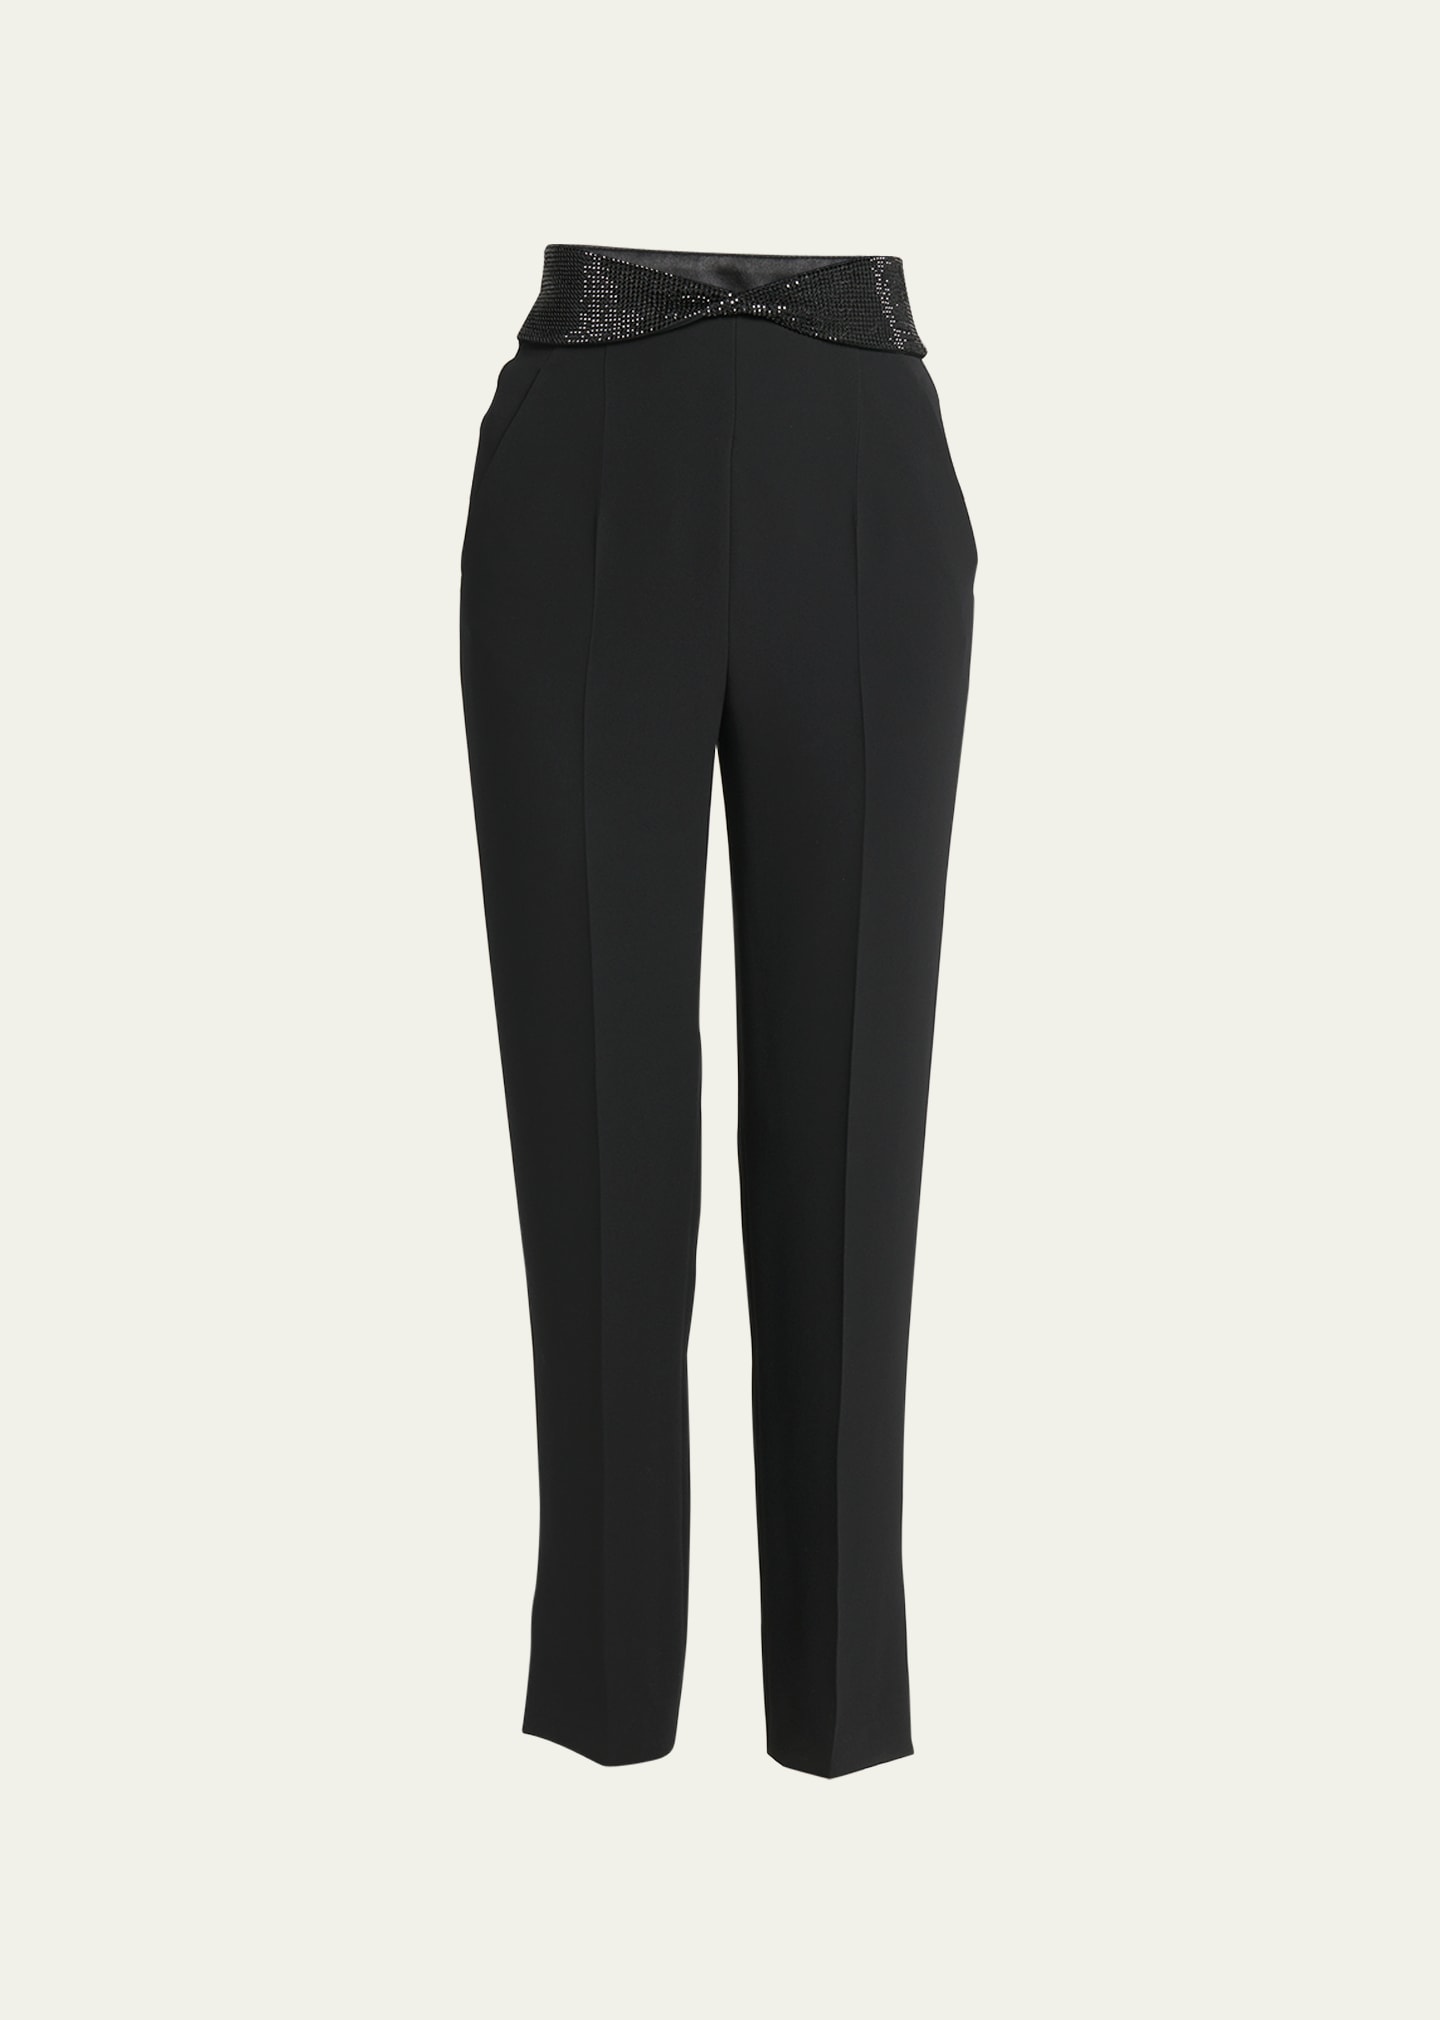 Giorgio Armani Embellished Tuxedo Pants In Solid Black